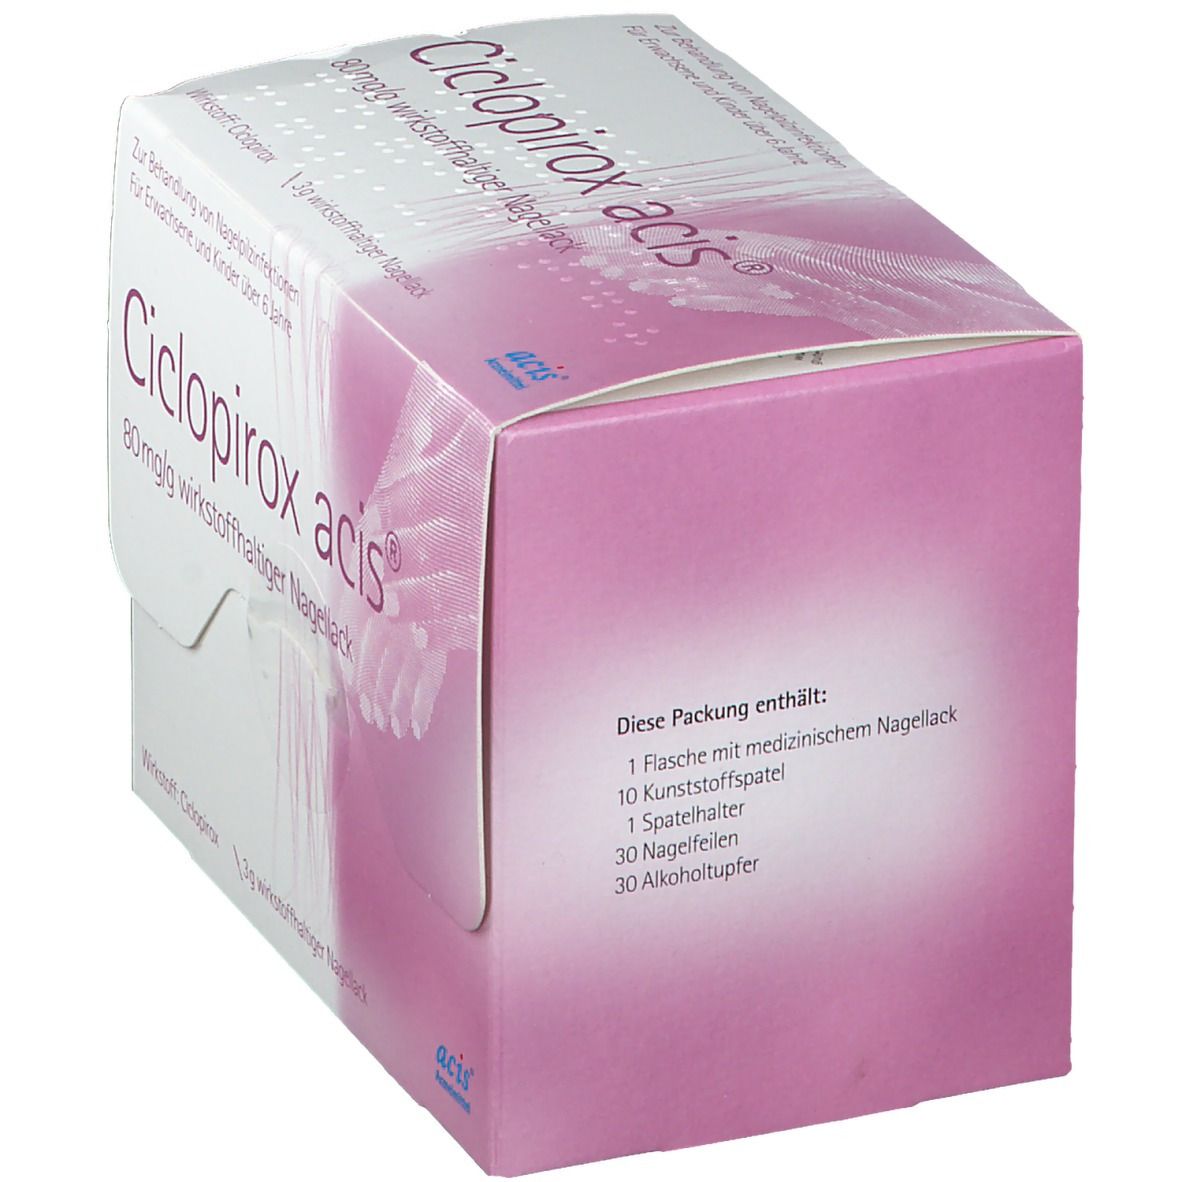 Ciclopirox acis® 80 mg/g